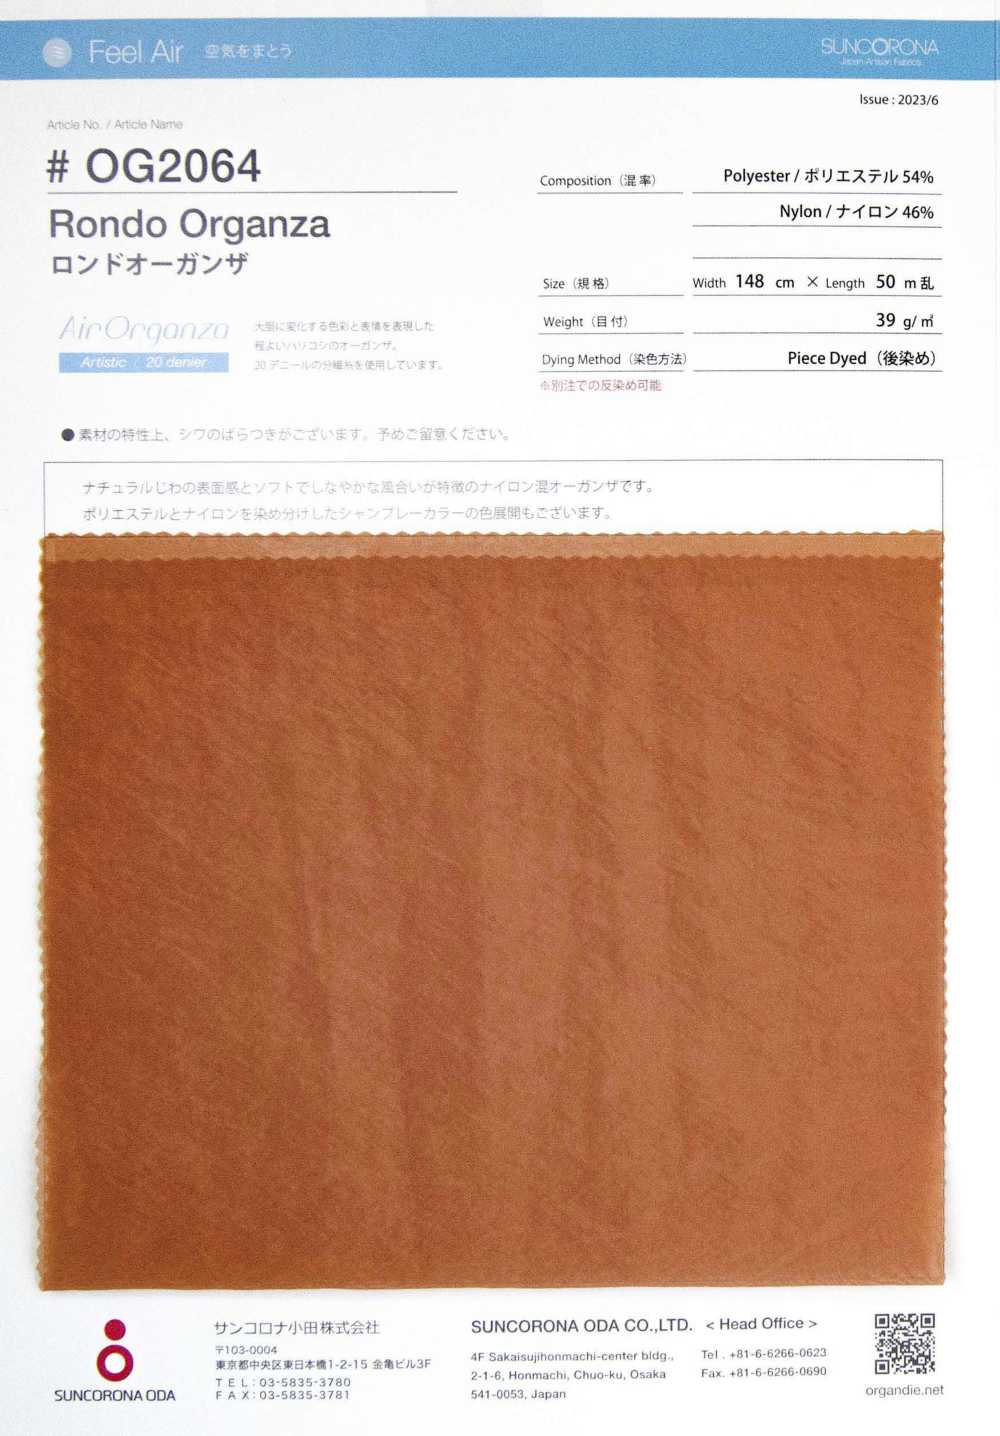 OG2064 Rondo Organza[Textile / Fabric] Suncorona Oda